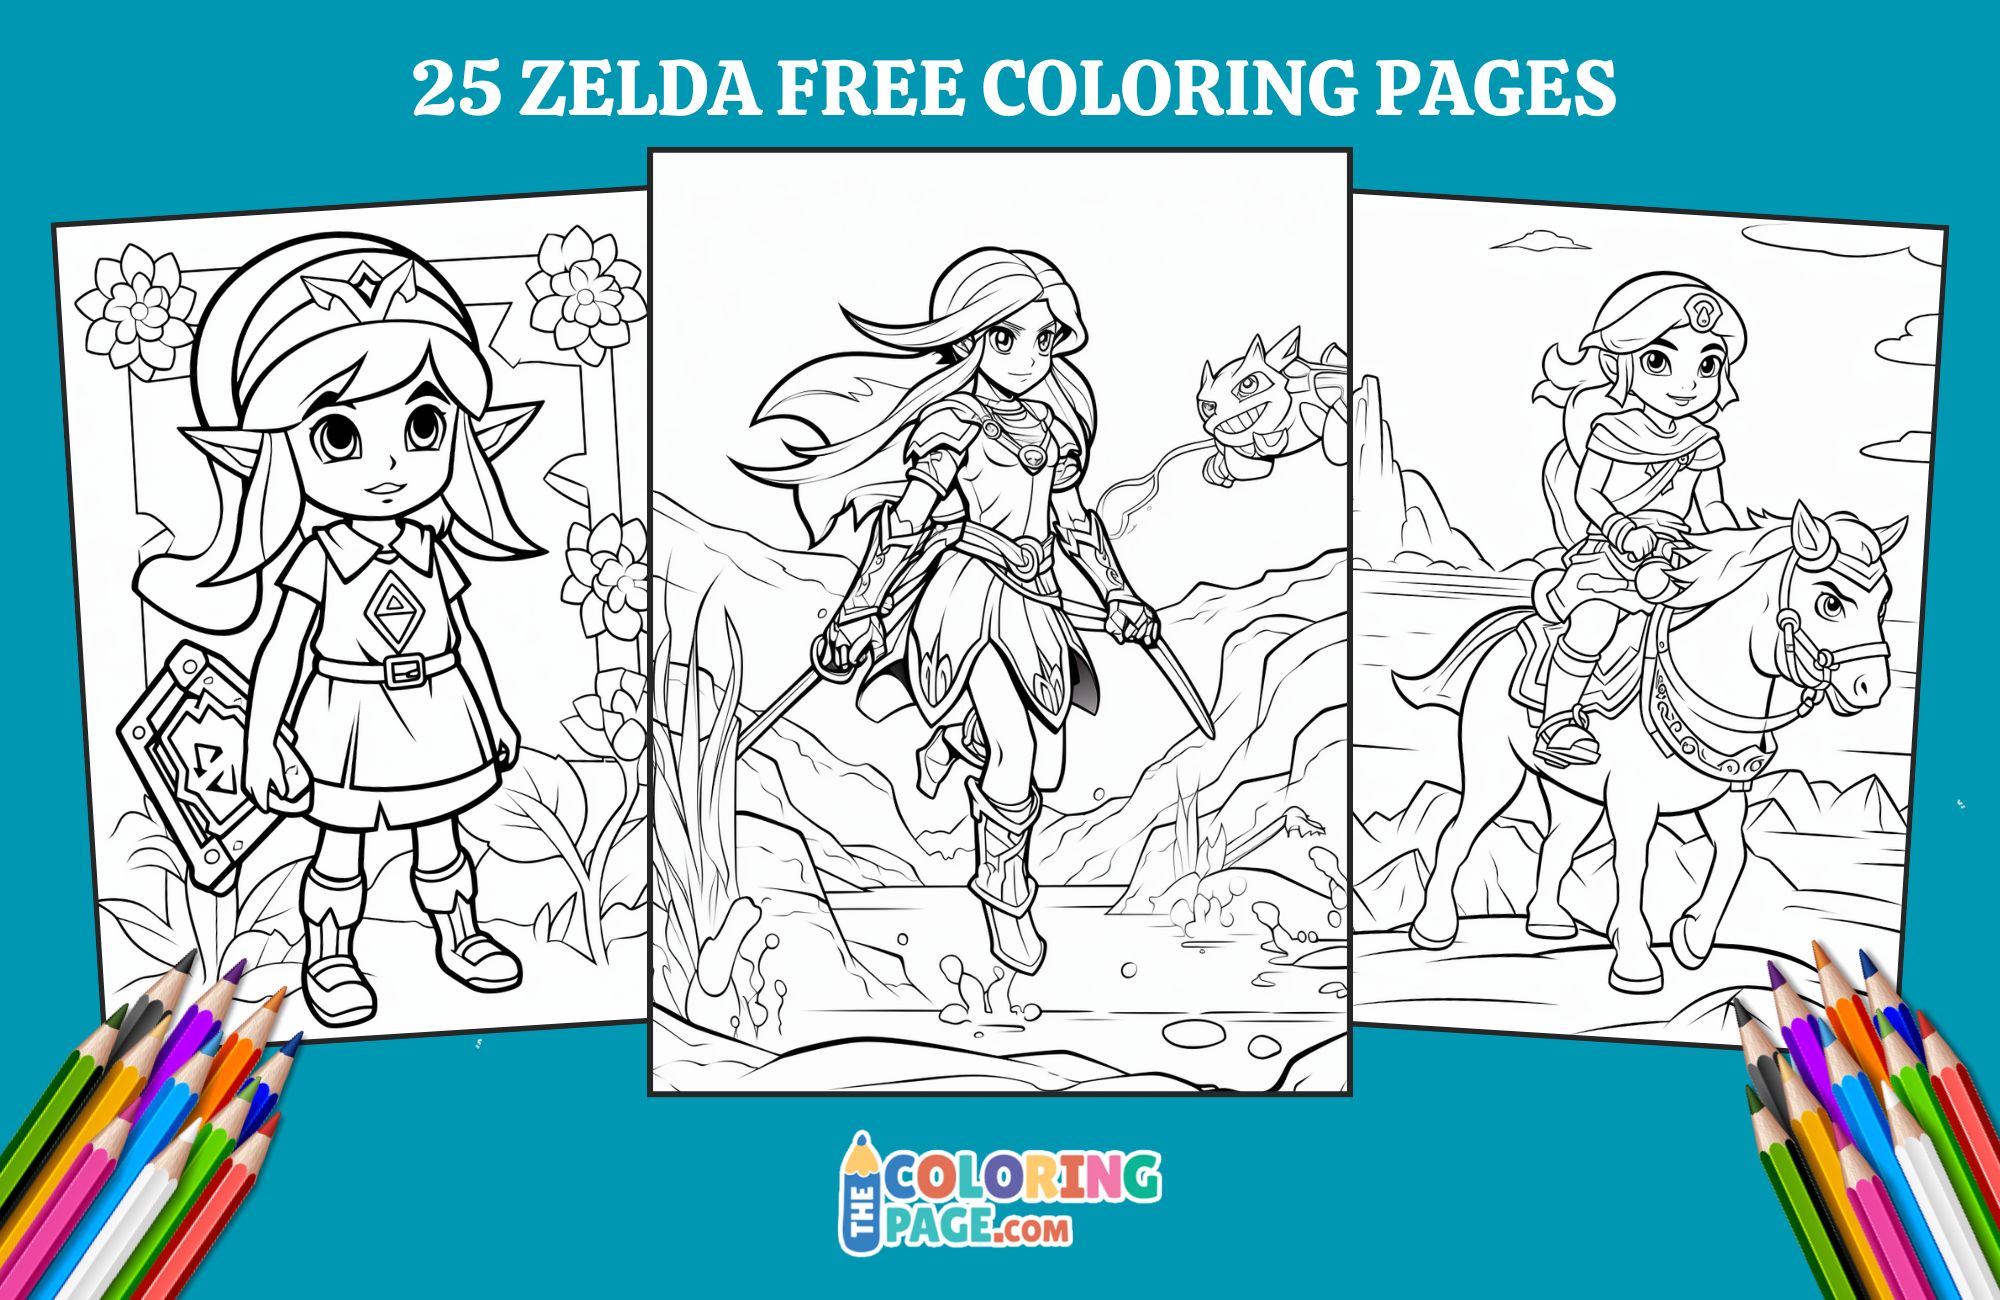 25 Zelda Coloring Pages for kids